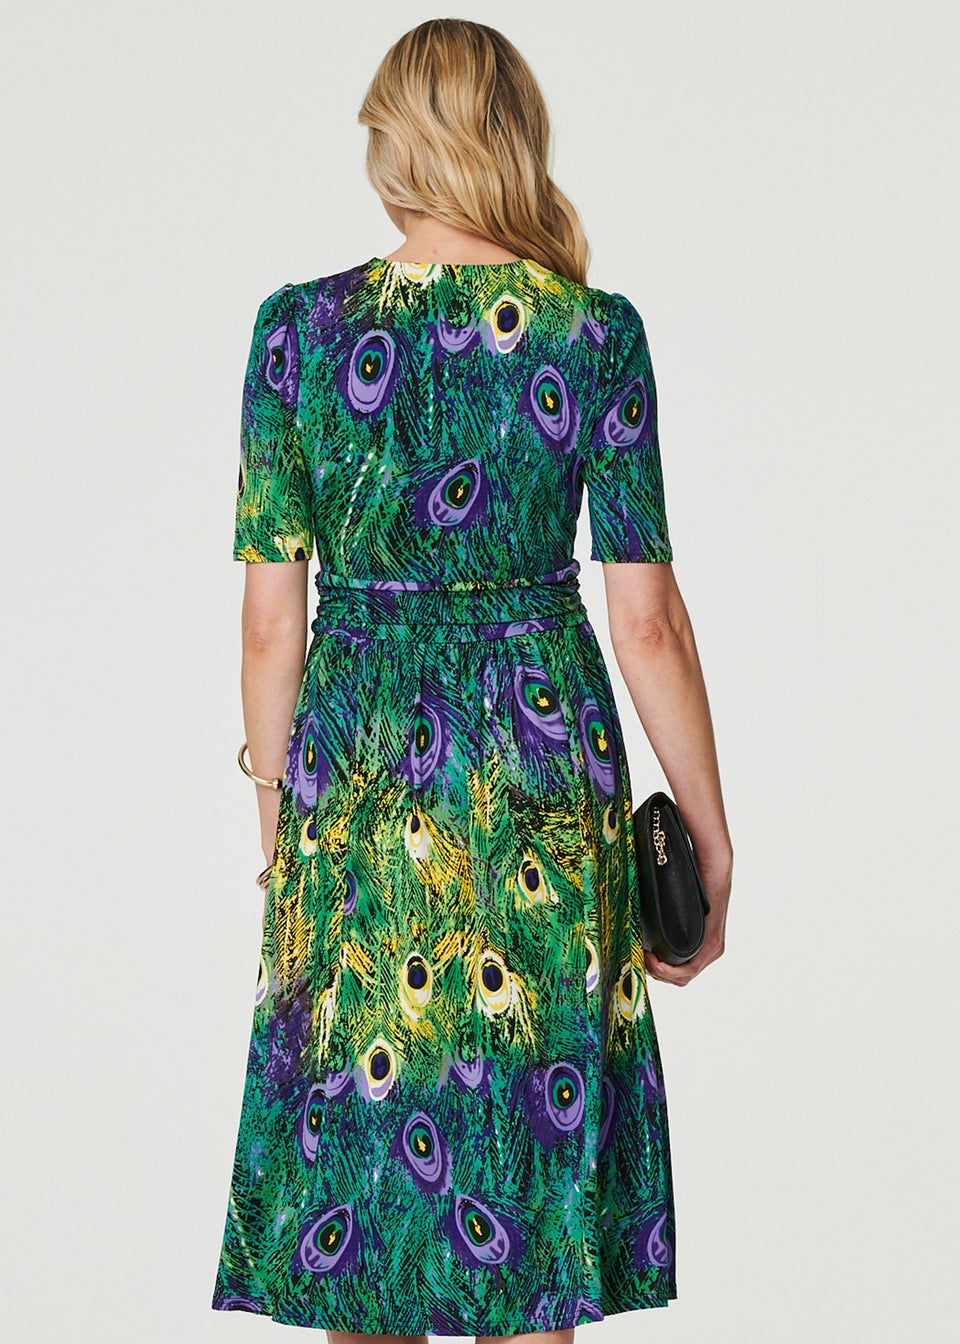 Izabel London Green Peacock Print Ruched Waist Dress